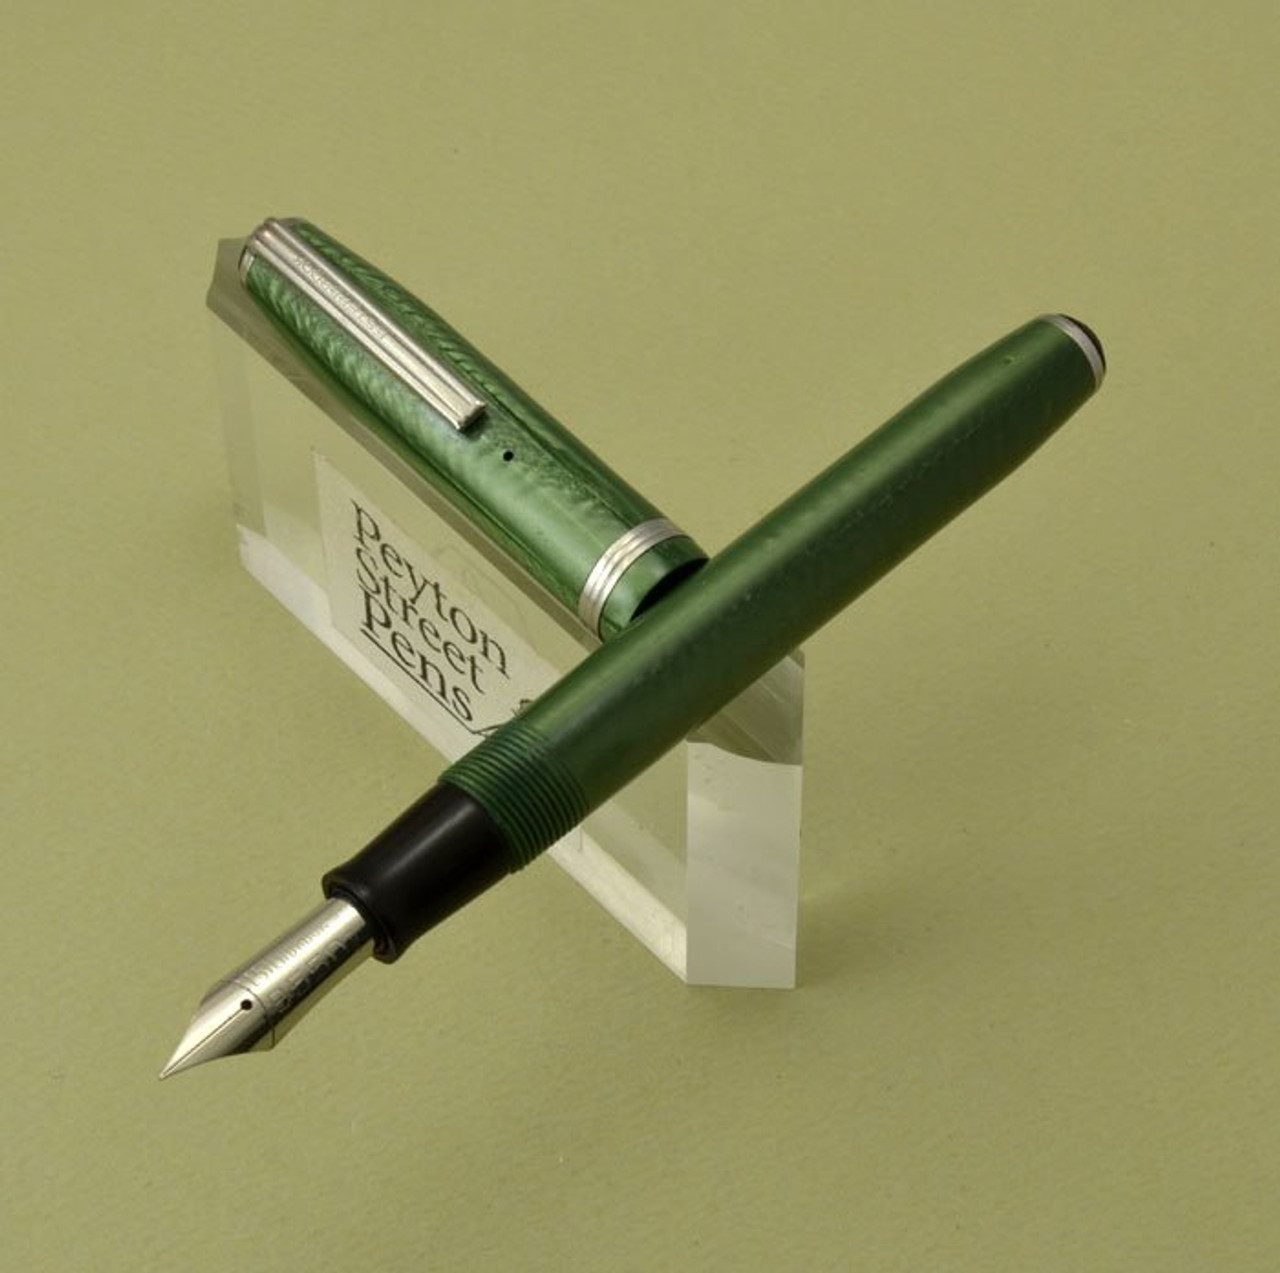 Esterbrook SJ Fountain Pen - Green, 9550 Extra Fine (Excellent, Restored)